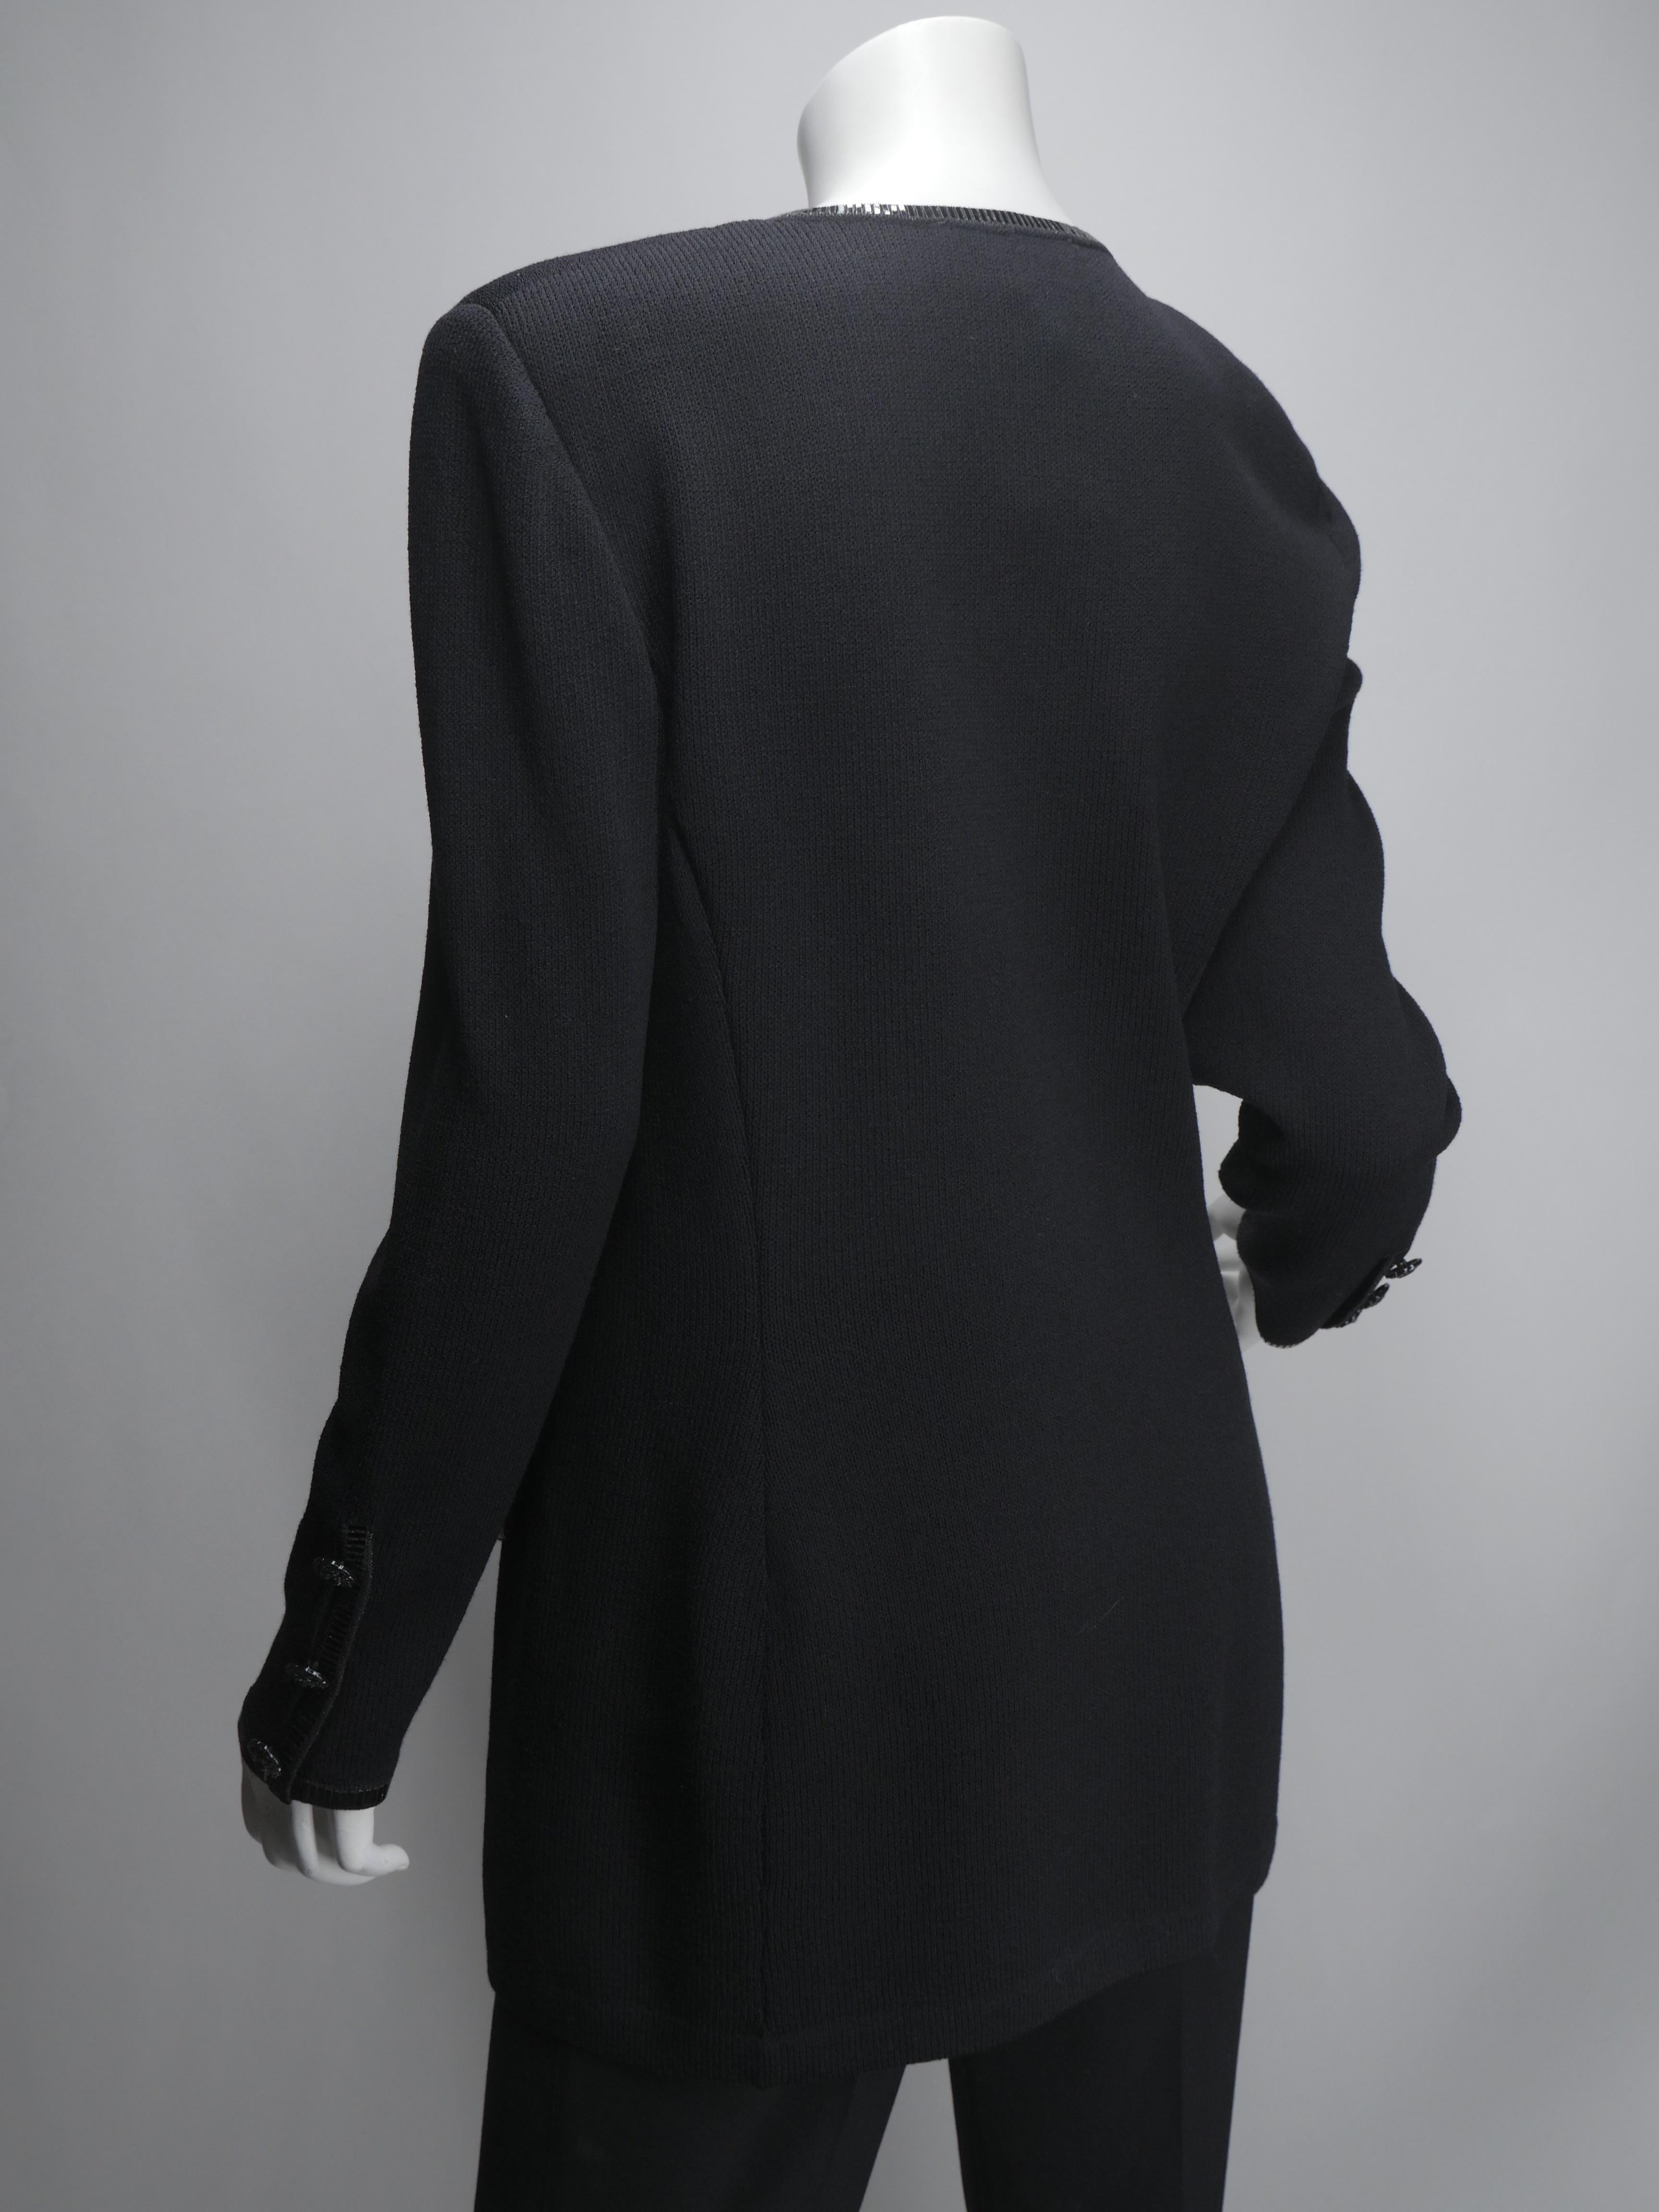 St John Women's Size 8 Black Knit Cardigan  3